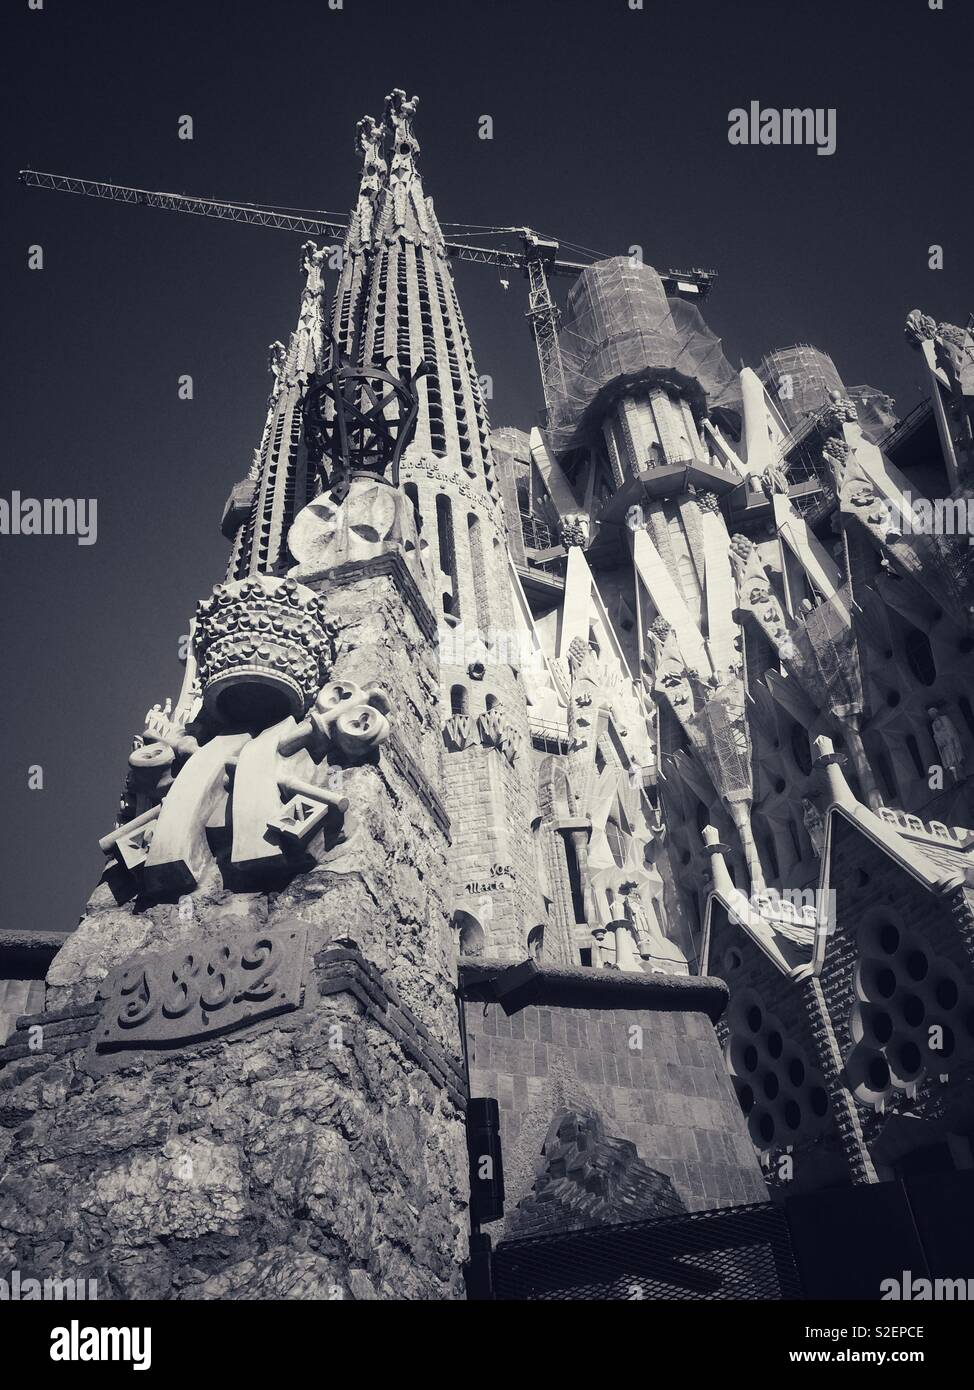 La Sagrada Familia basilica in black and white portrait showing architectural details on the building in Barcelona Spain Stock Photo